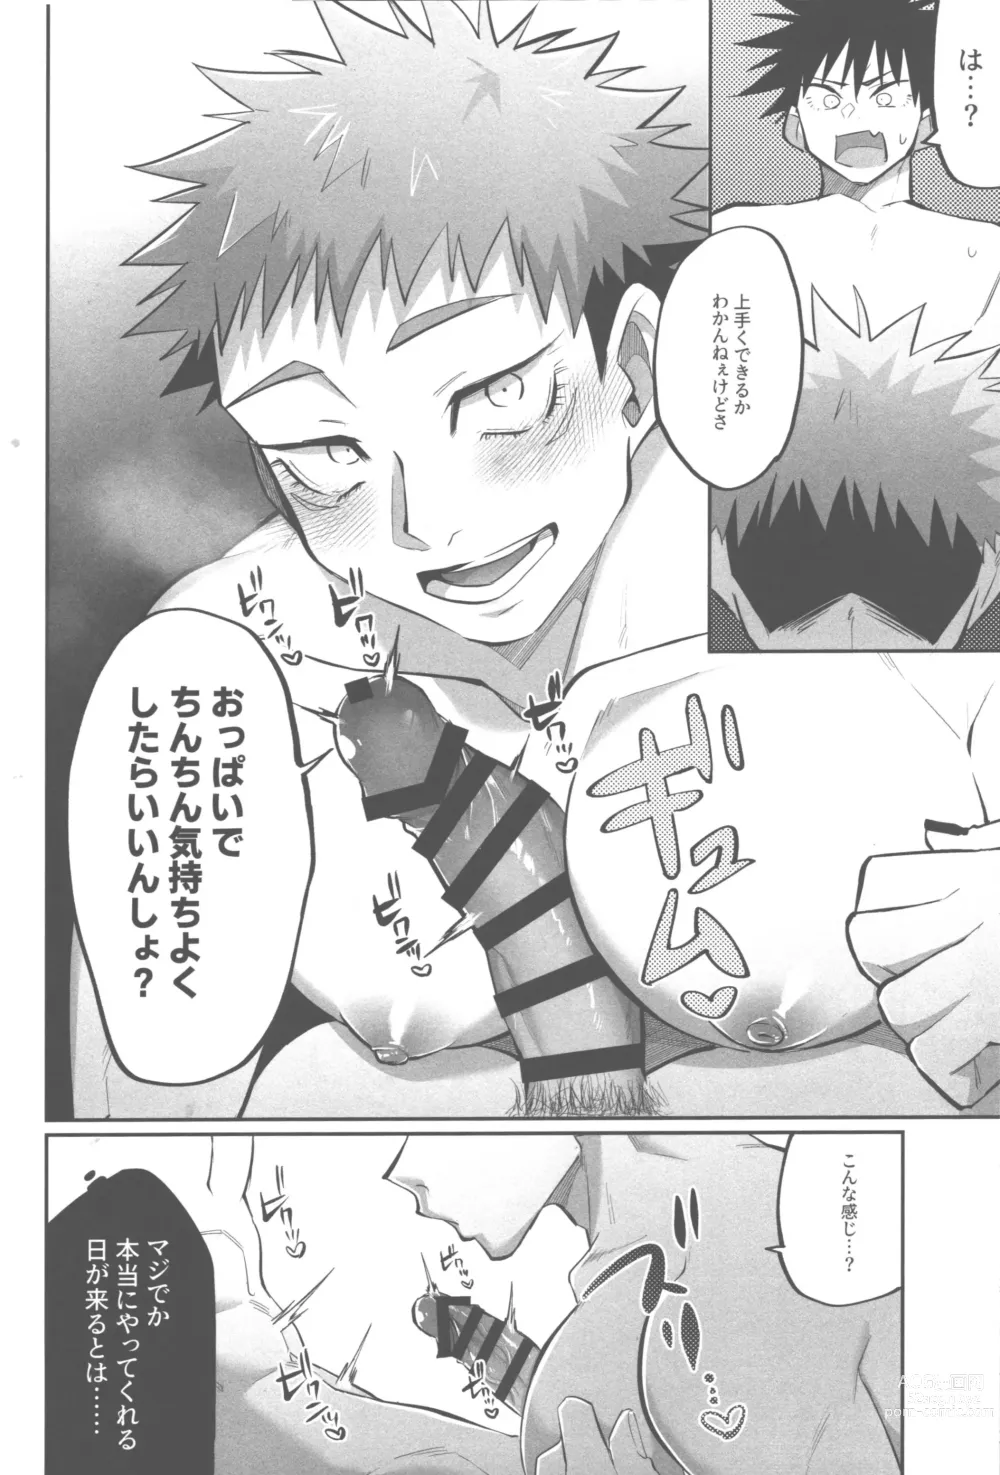 Page 19 of doujinshi Mune no Uchi Seiippai